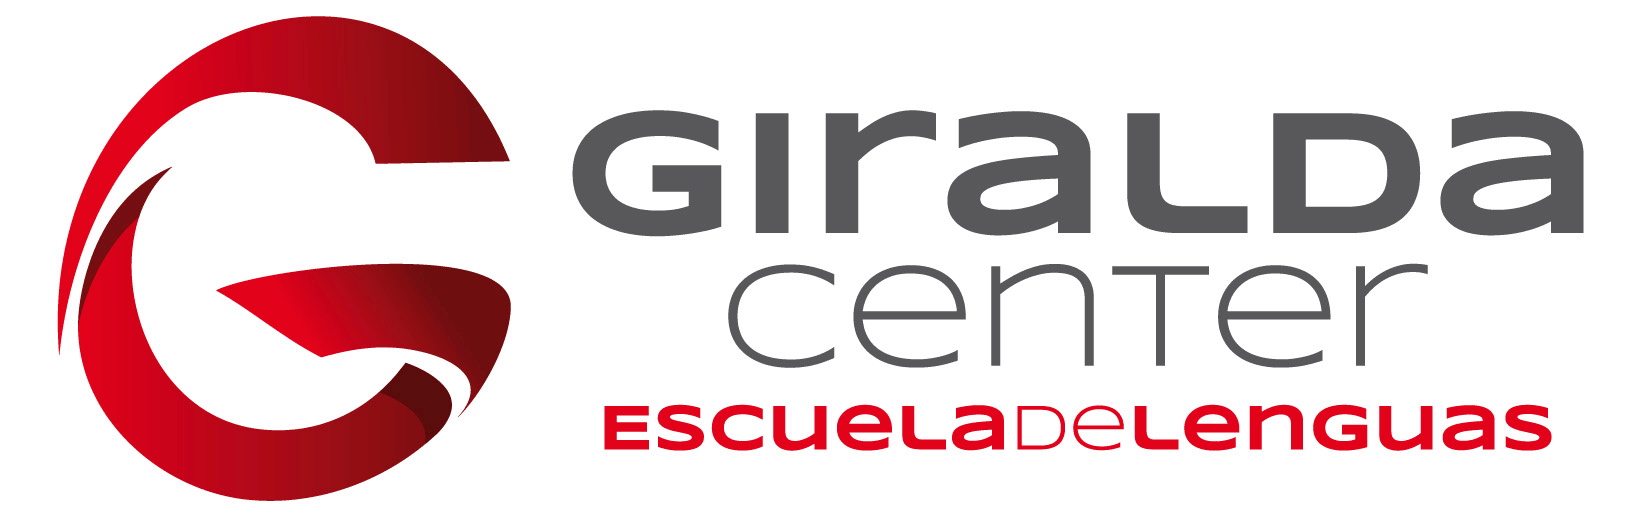 Giralda Center